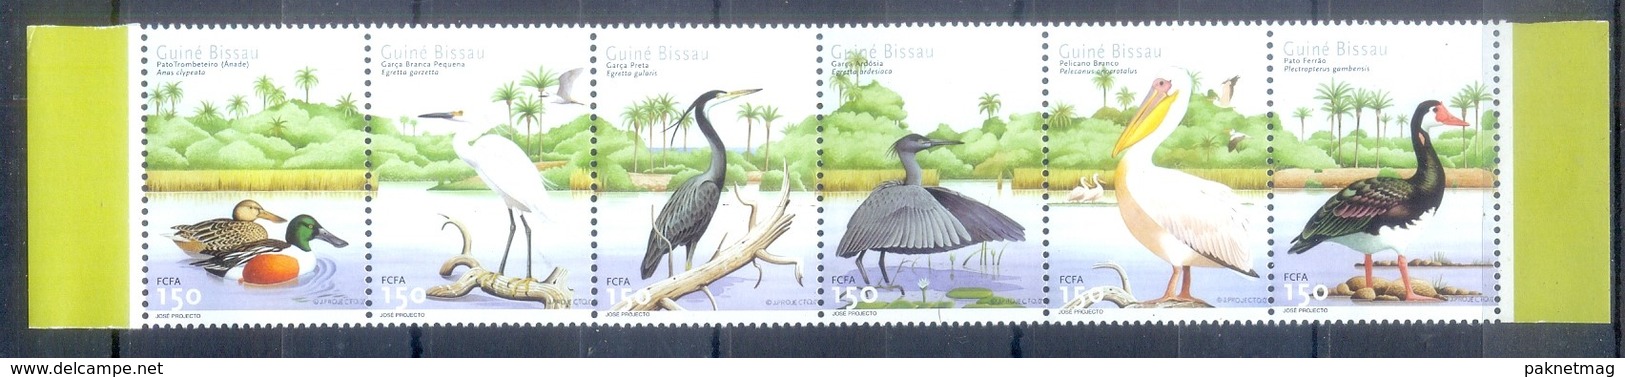 G77- Guinea Guine Bissau 2001 Marine Birds. - Guinea-Bissau